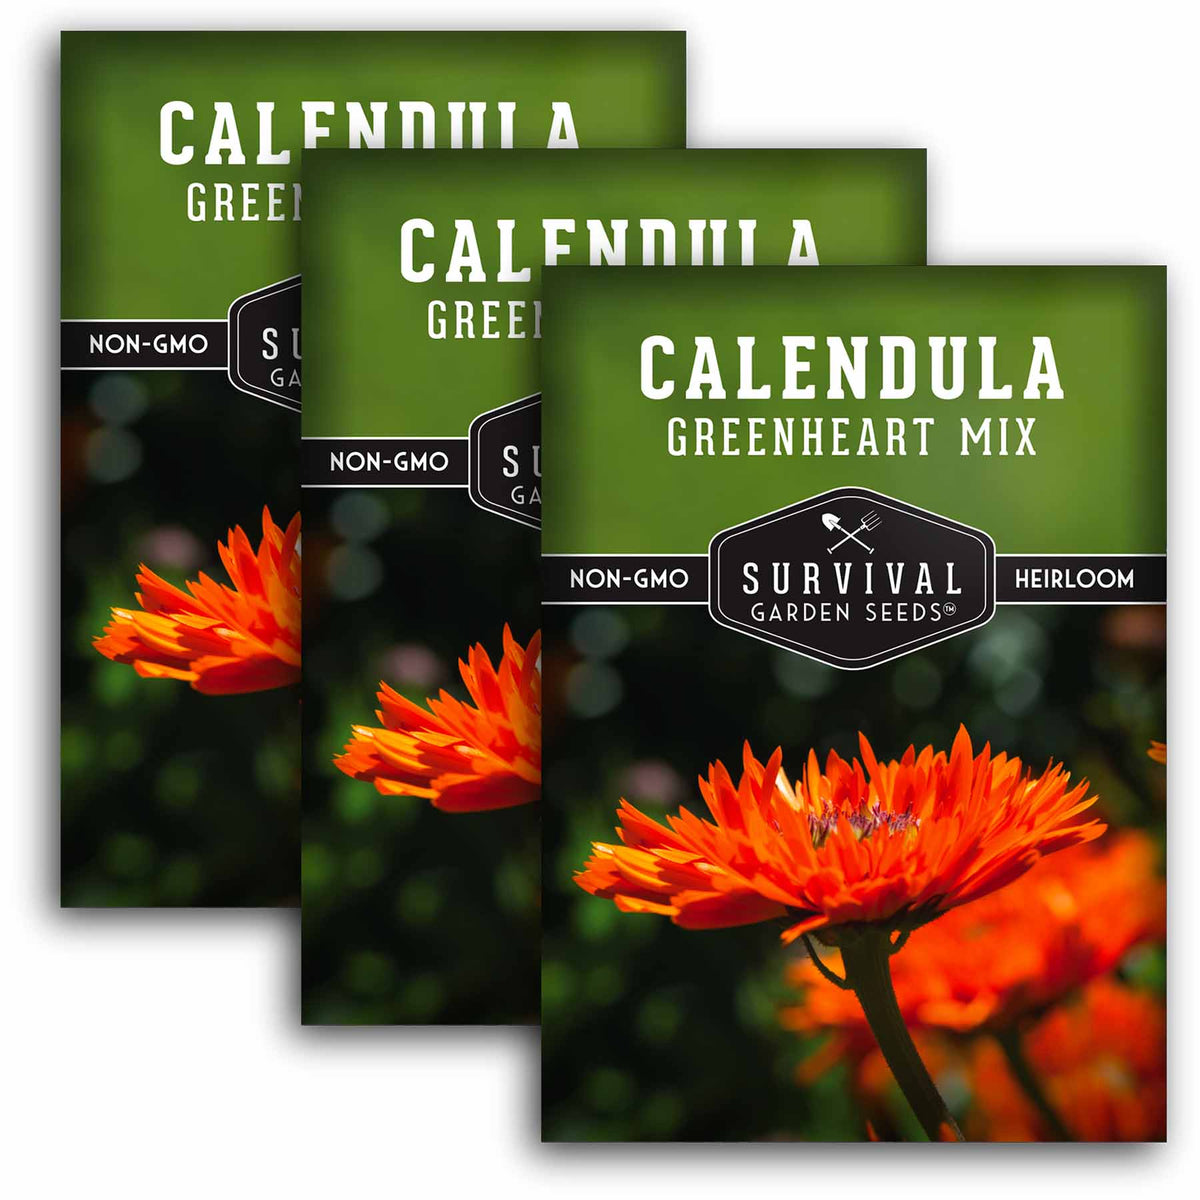 3 packets of Greenheart Mix Calendula seeds